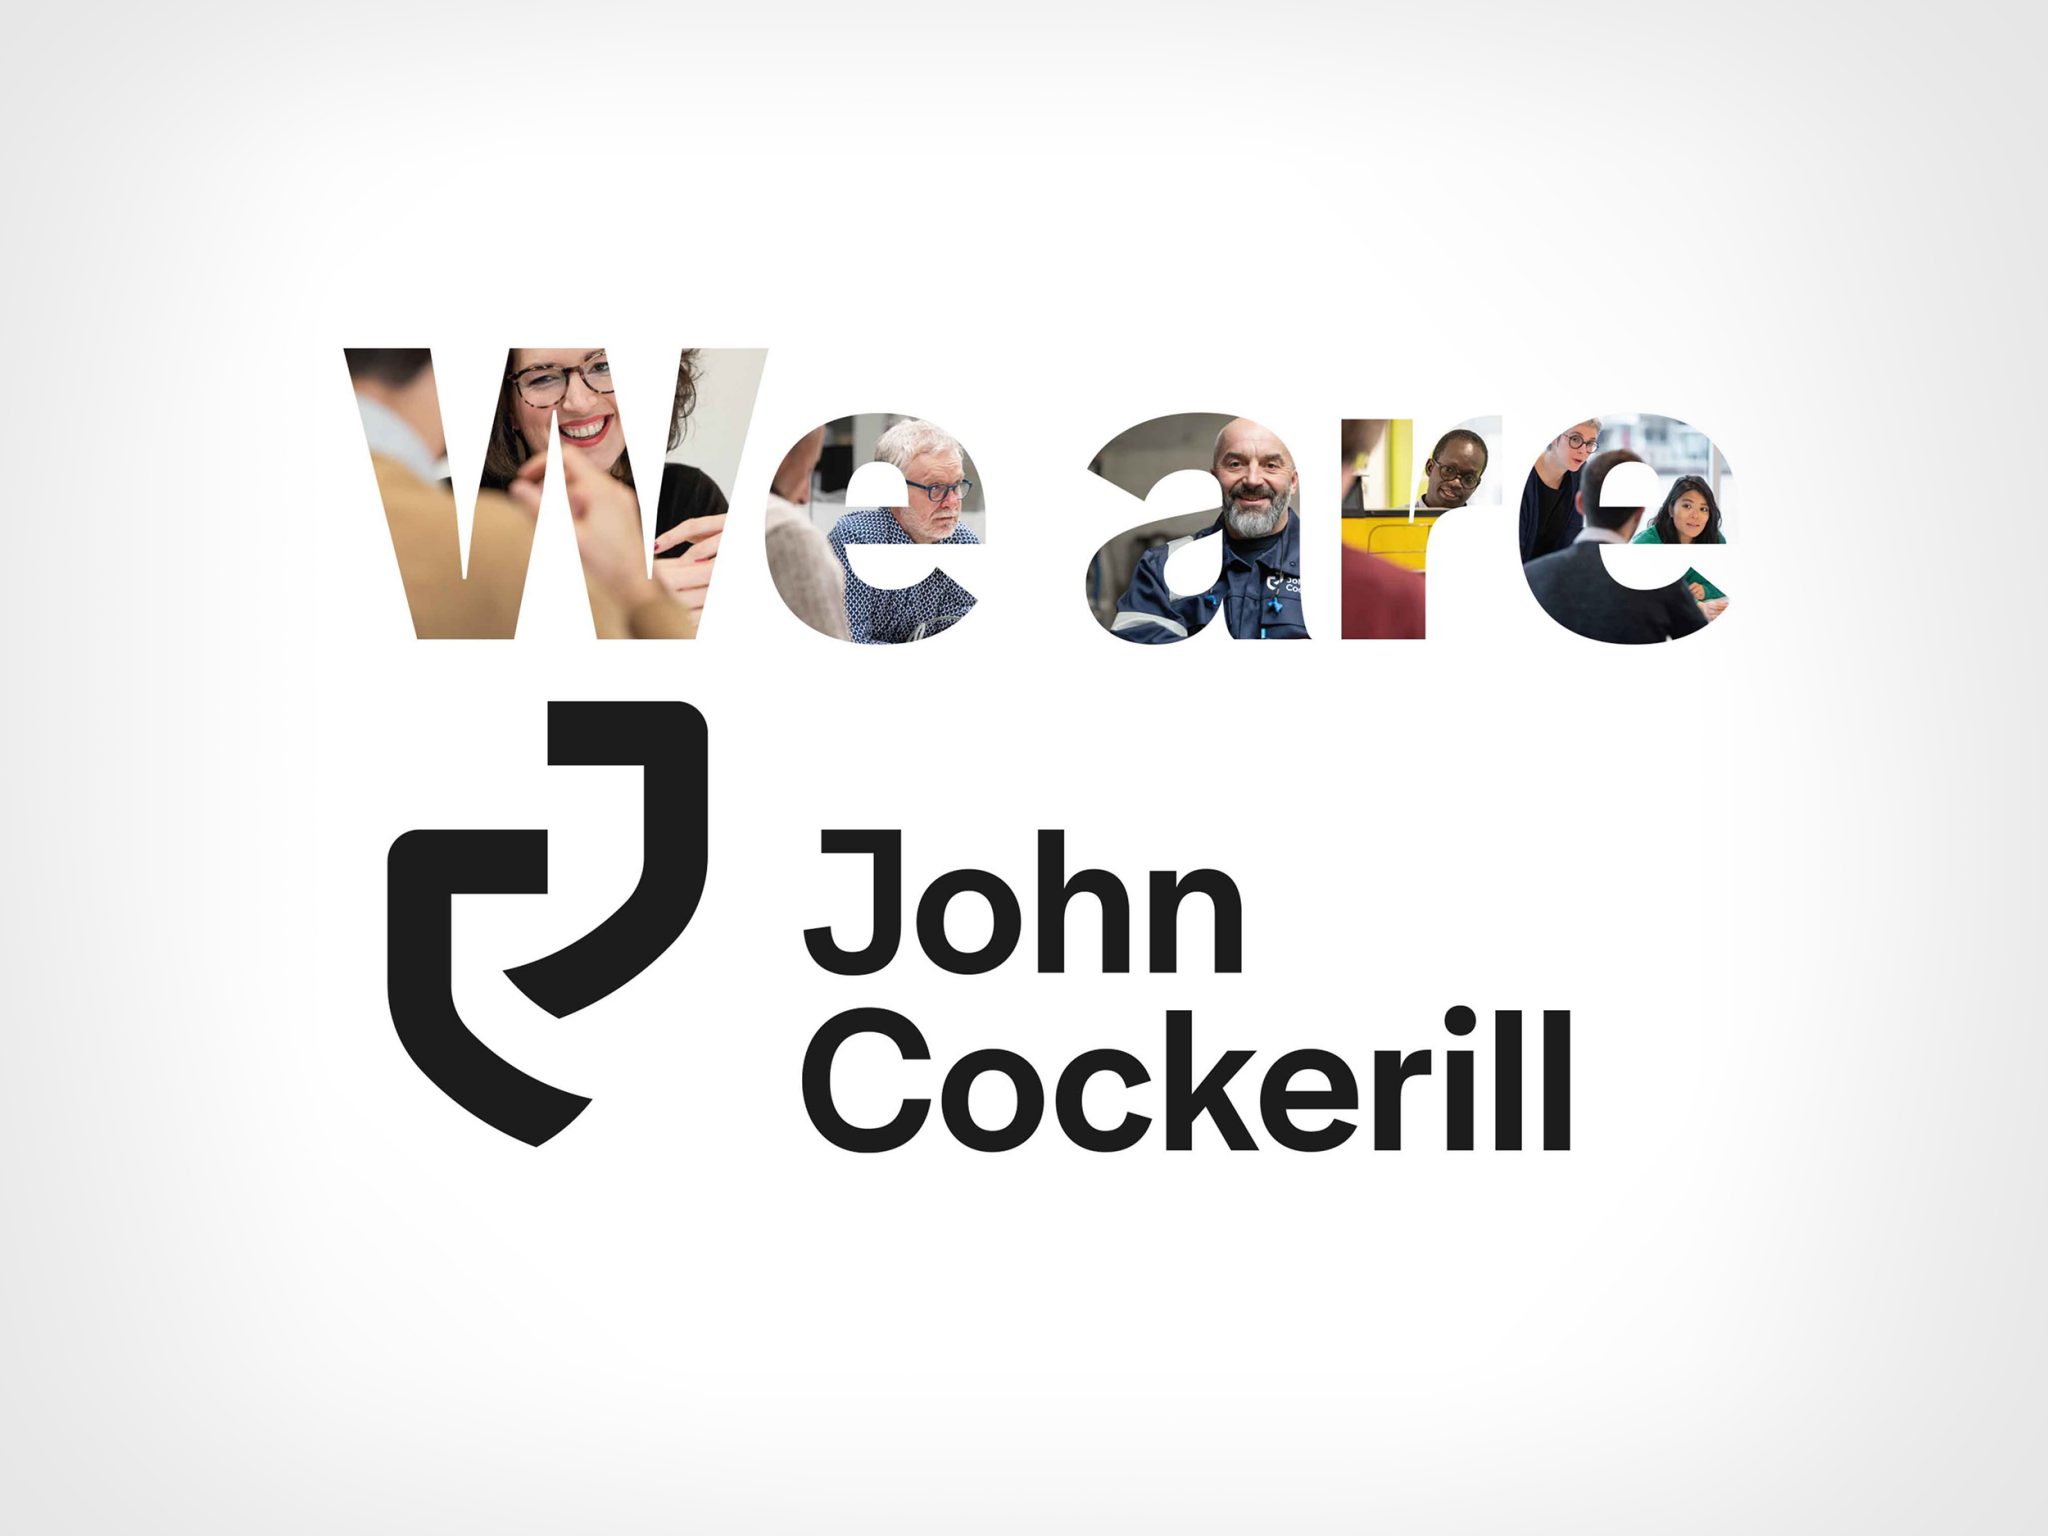 We are John Cockerill